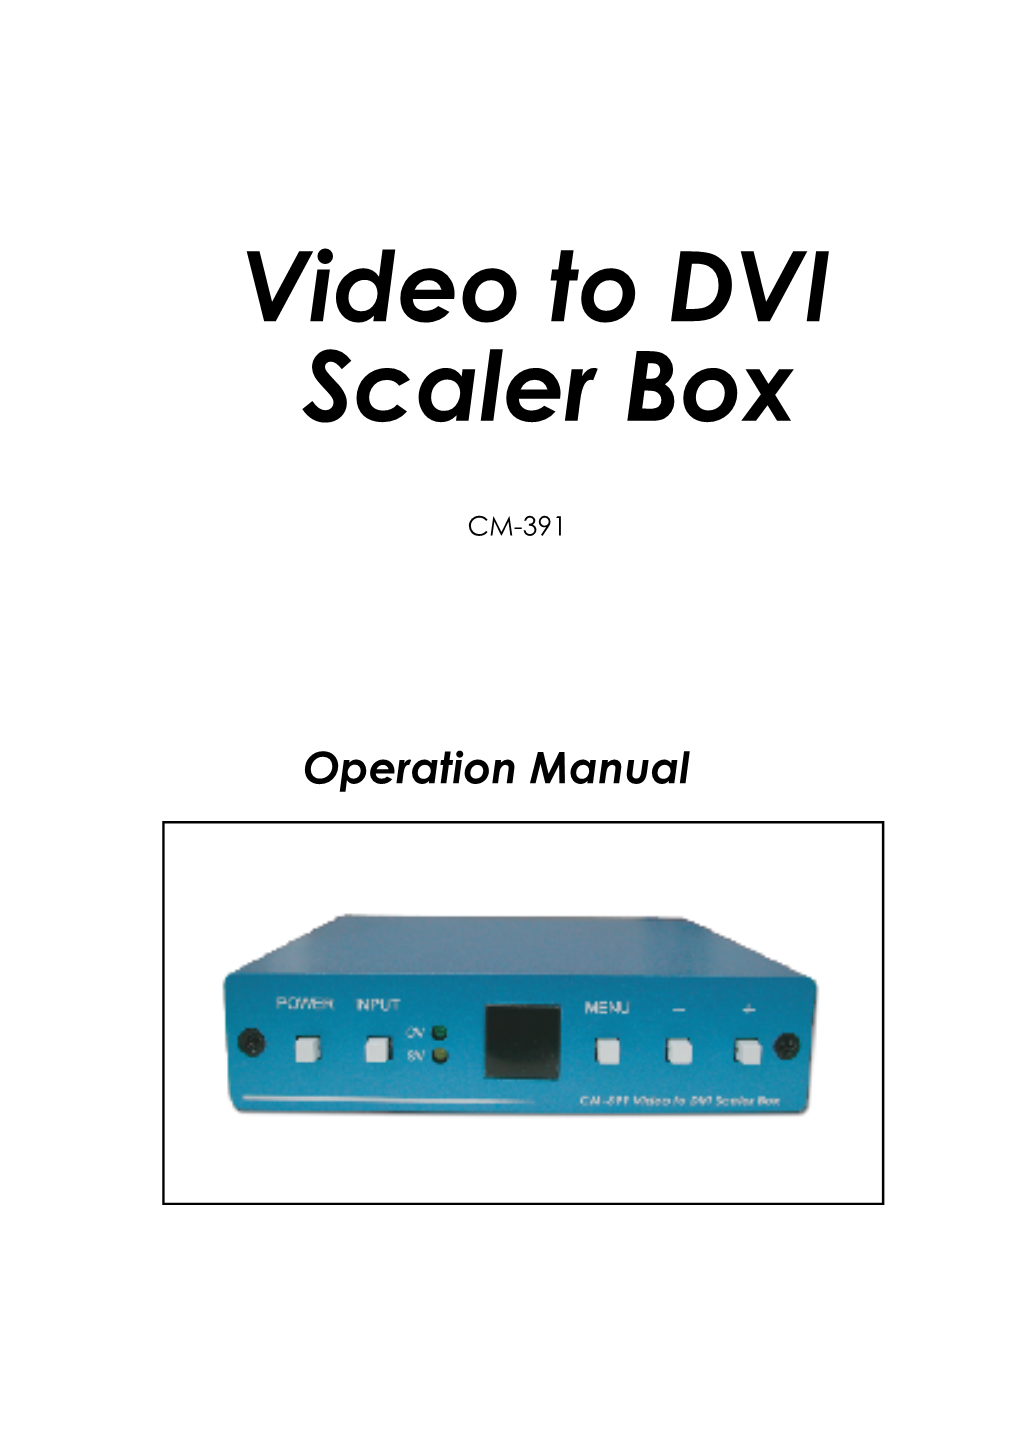 Video to DVI Scaler Box